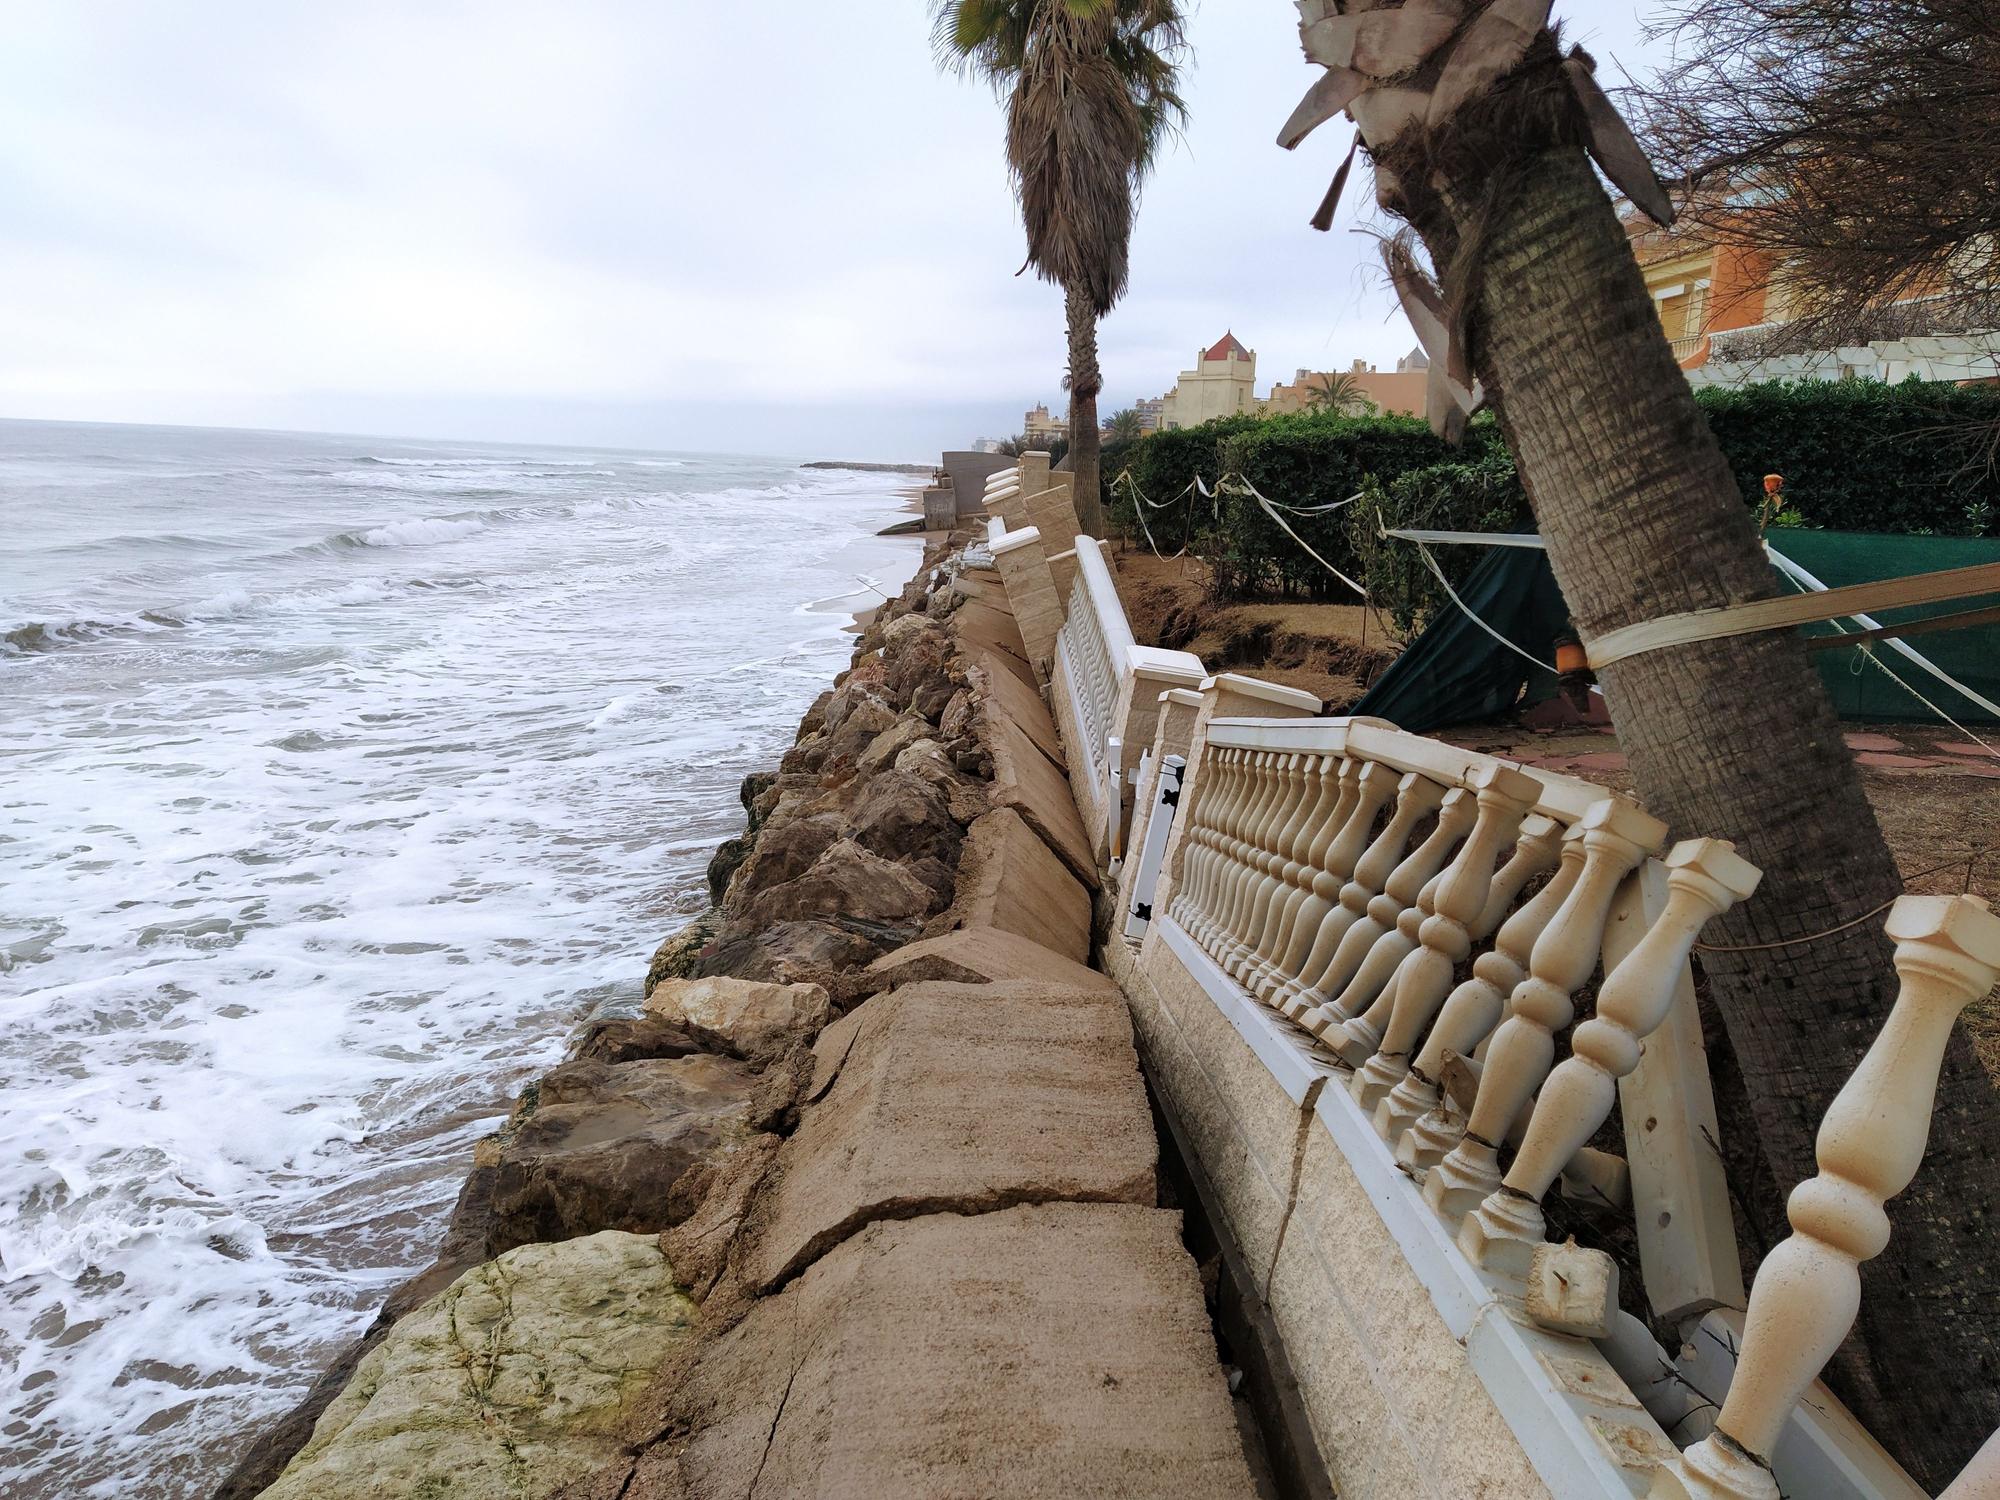 El temporal arrasa la playa de Tavernes